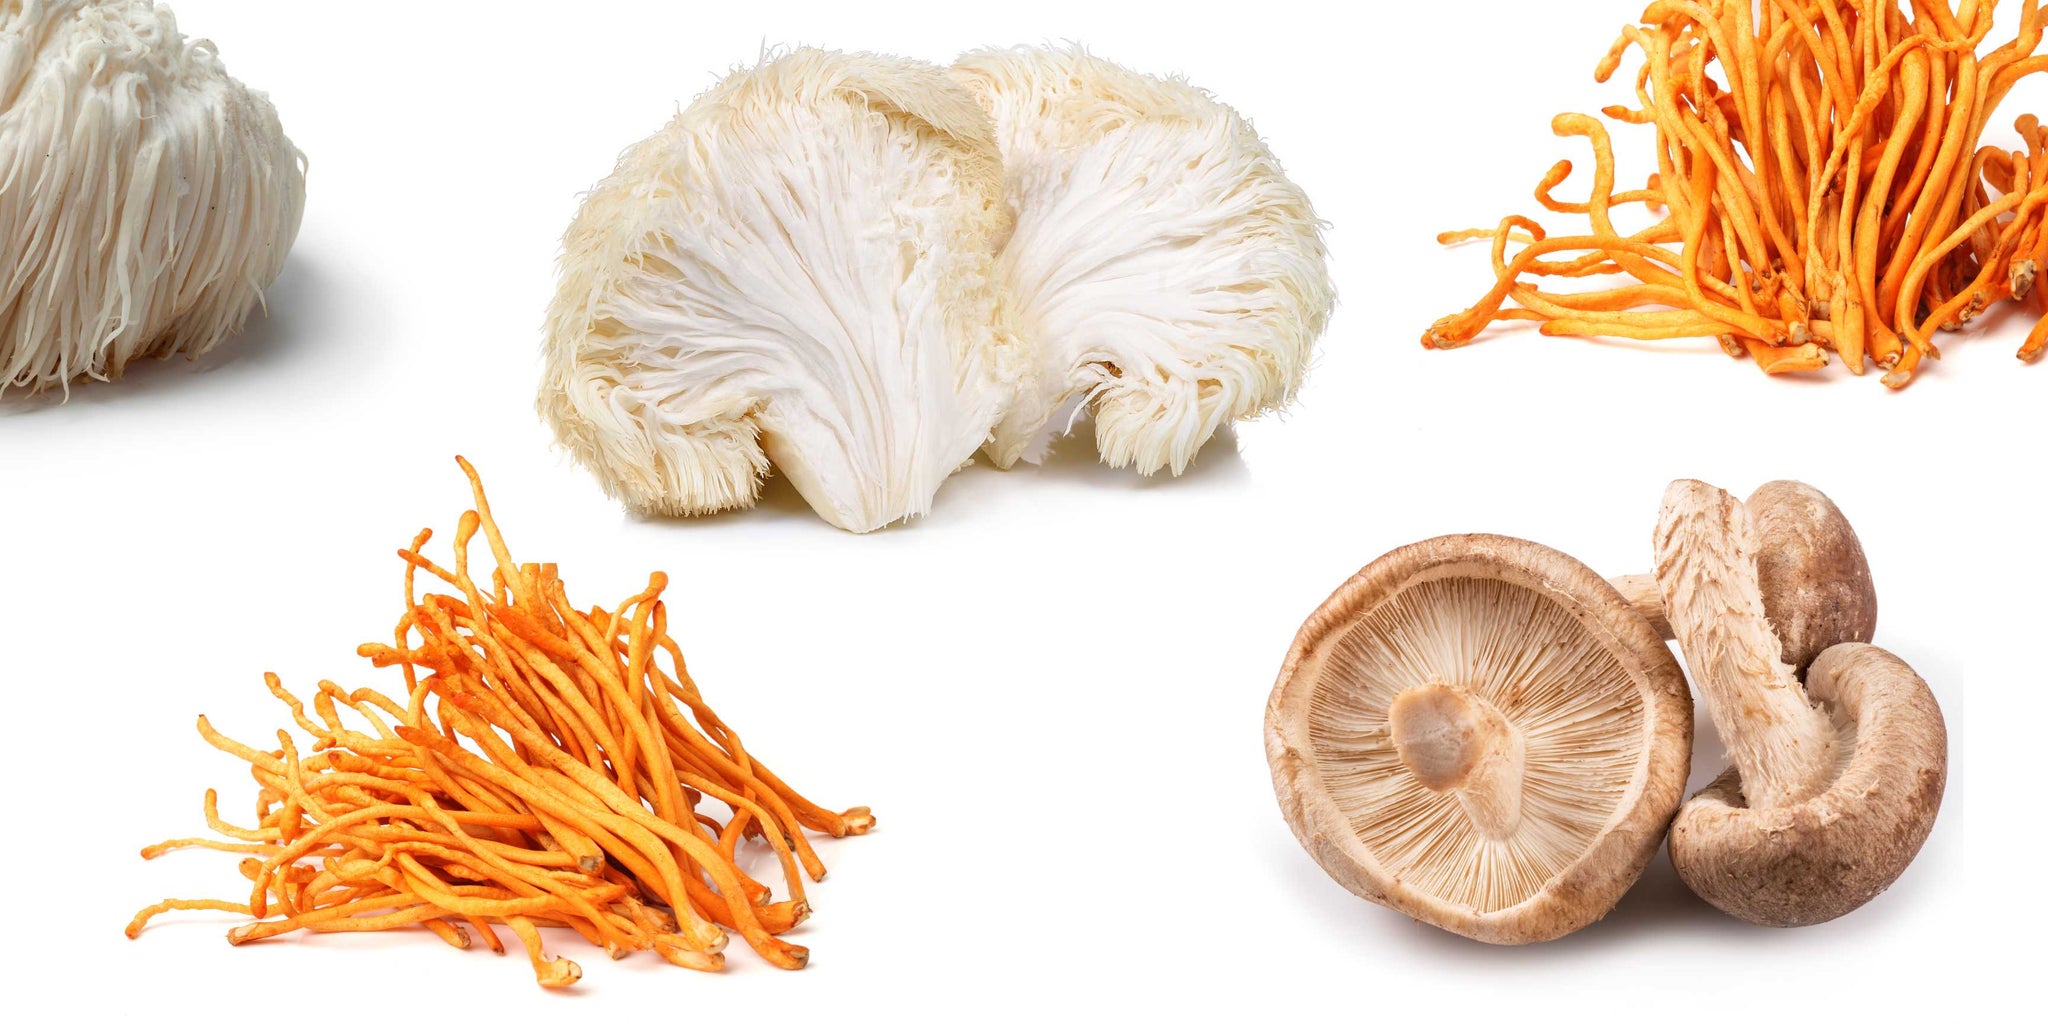 The Magic of Medicinal Mushrooms: 10 Facts